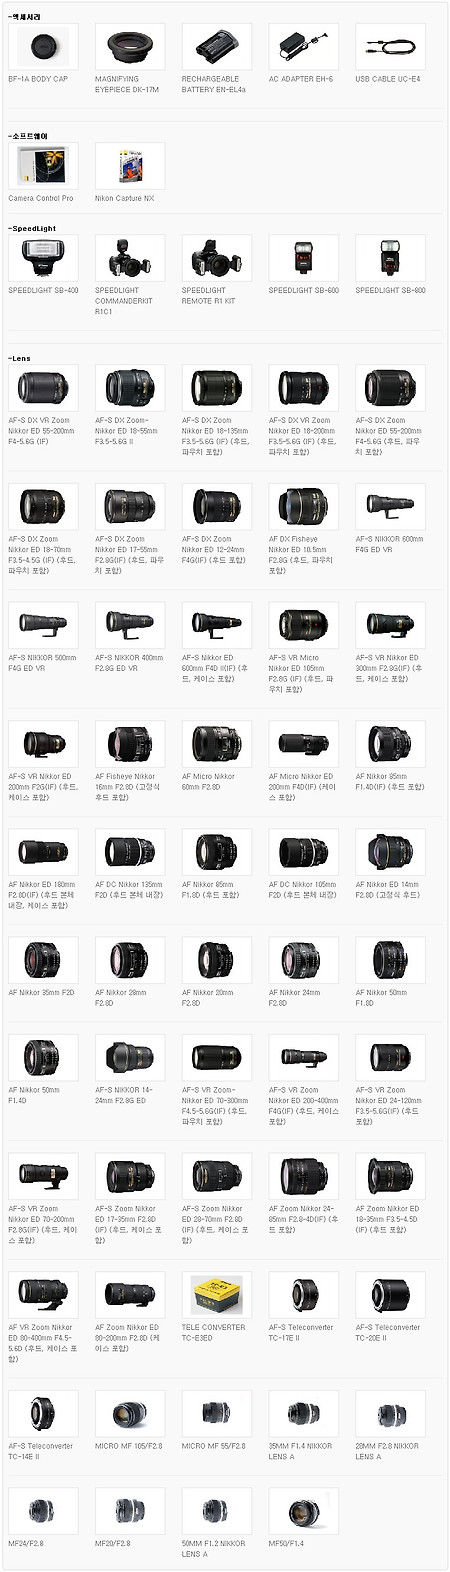 Nikon D3 제품상세 설명입니다. (니콘이미징코리아)